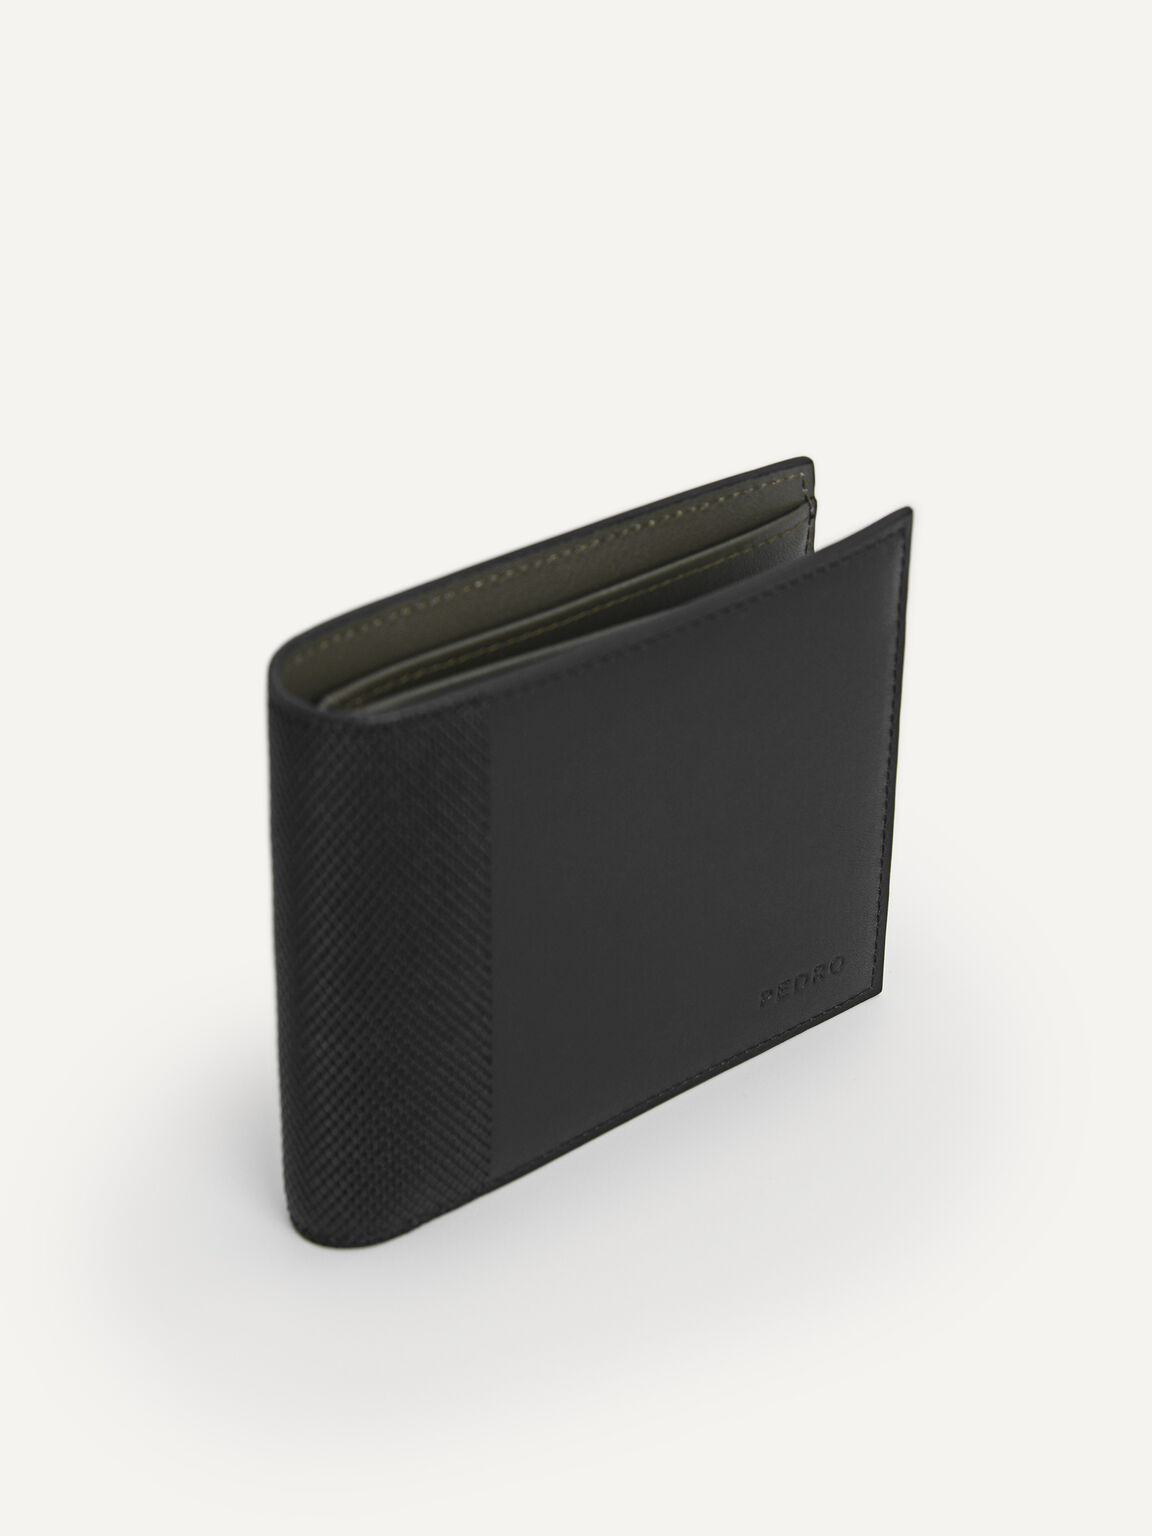 Leather Bi-Fold Wallet, Black